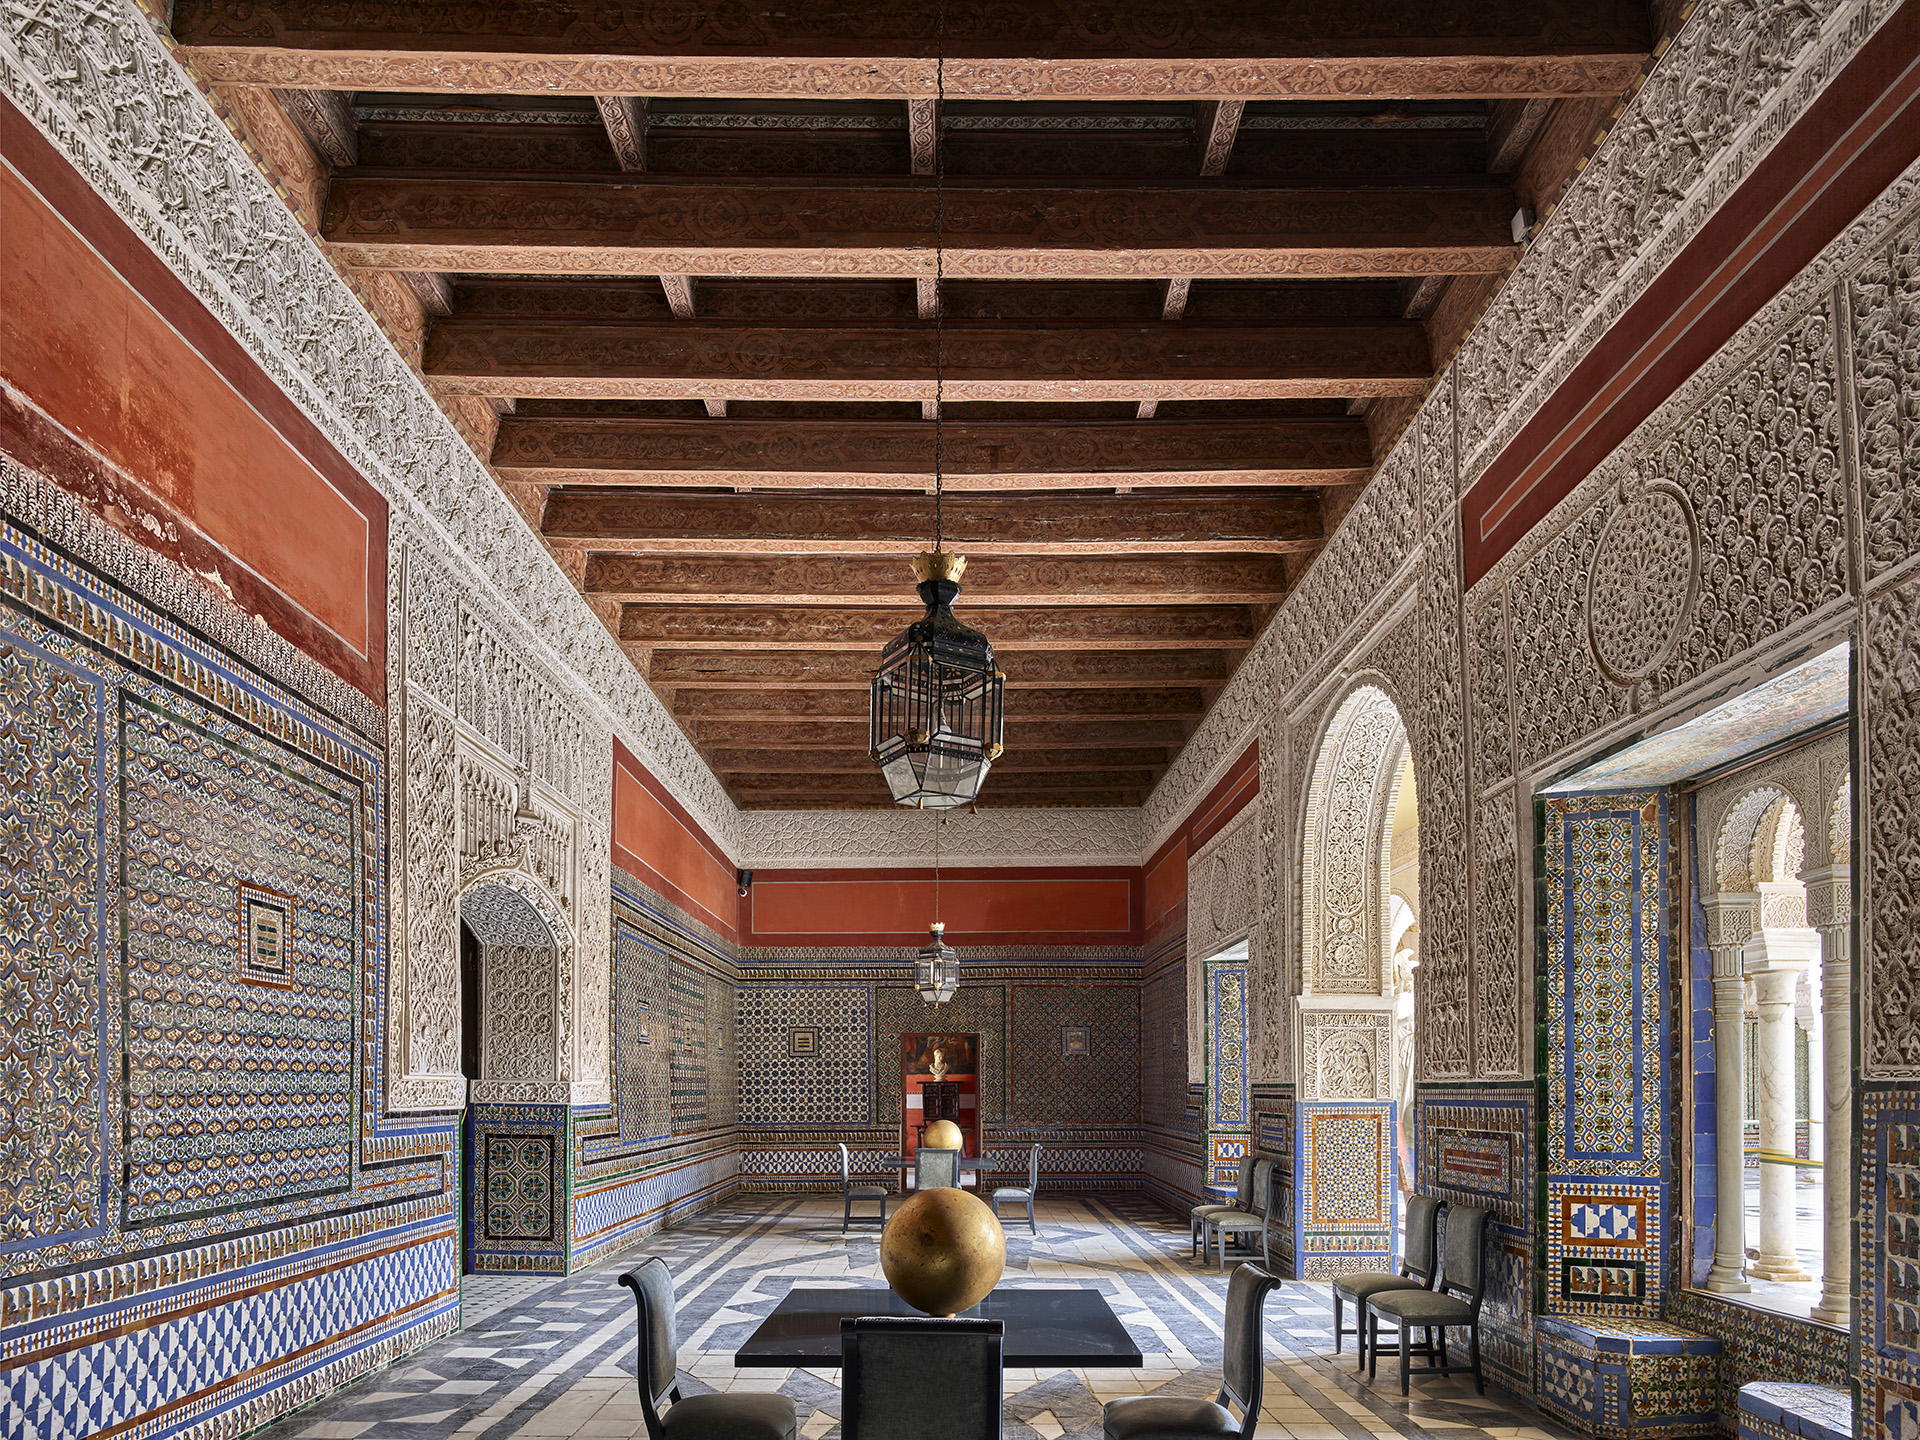 Antecapilla Hall or Judges' Resting Room, Casa de Pilatos, Seville